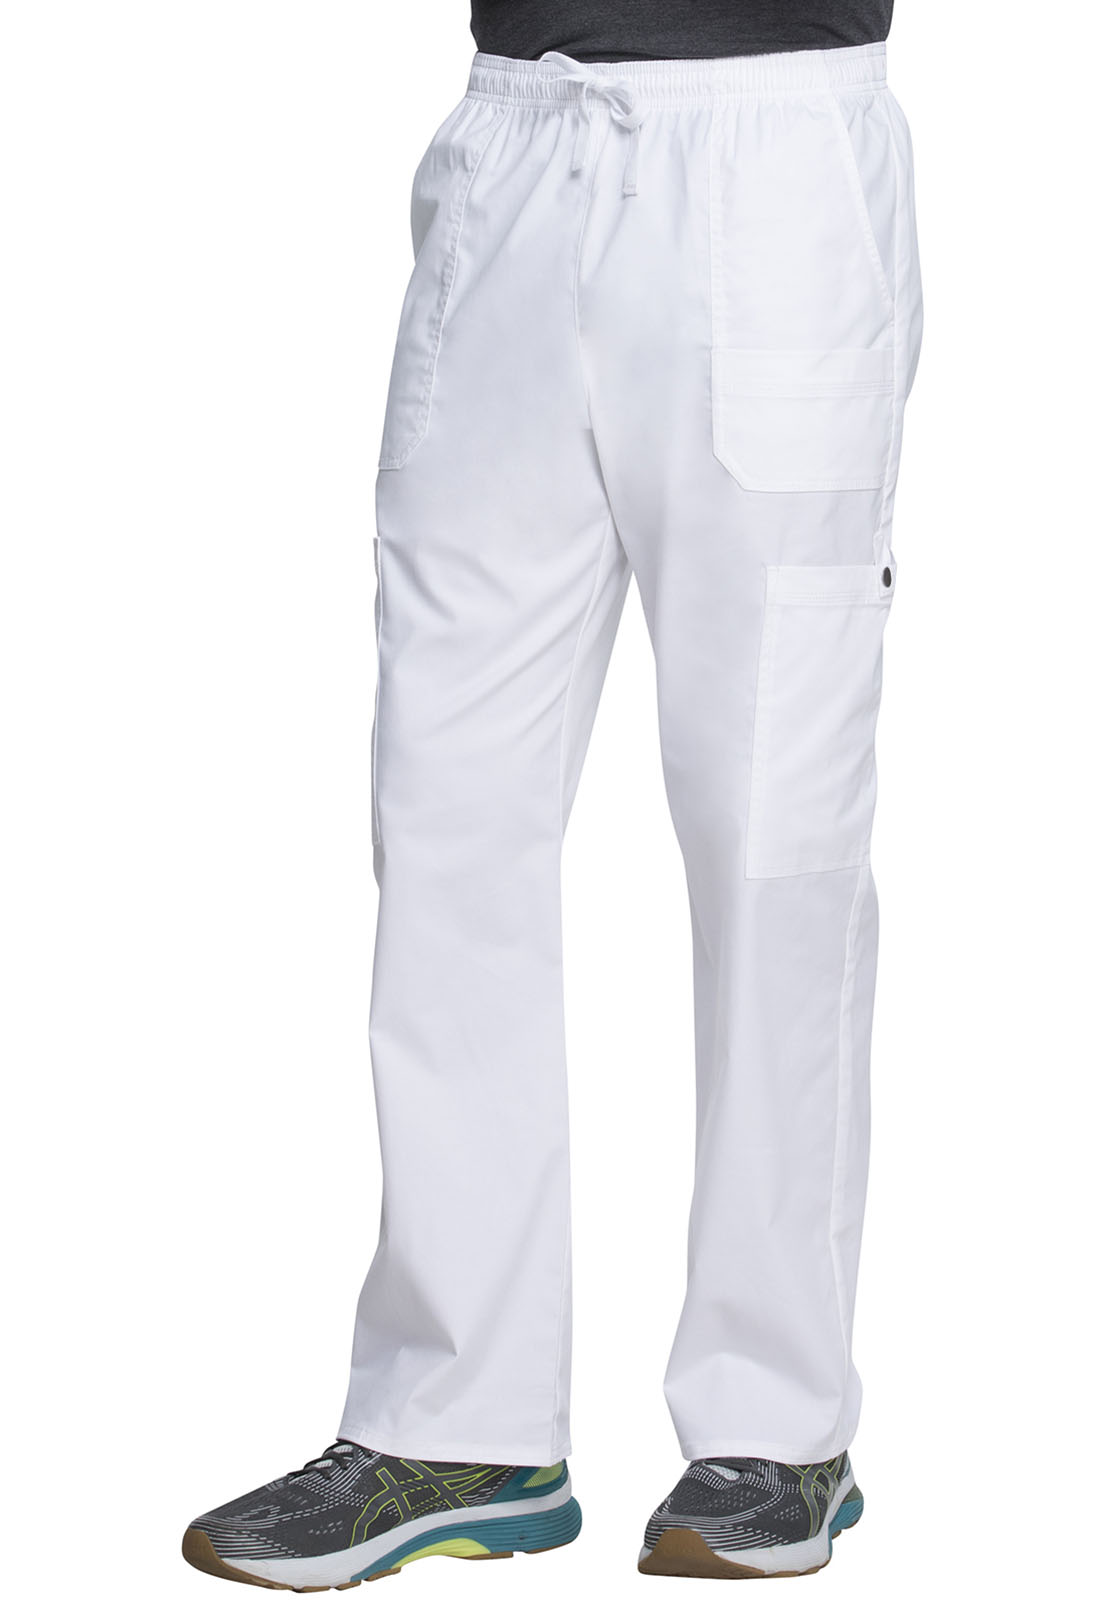 Dickies Gen Flex Men's Drawstring Cargo Pant in White from Dickies Medical